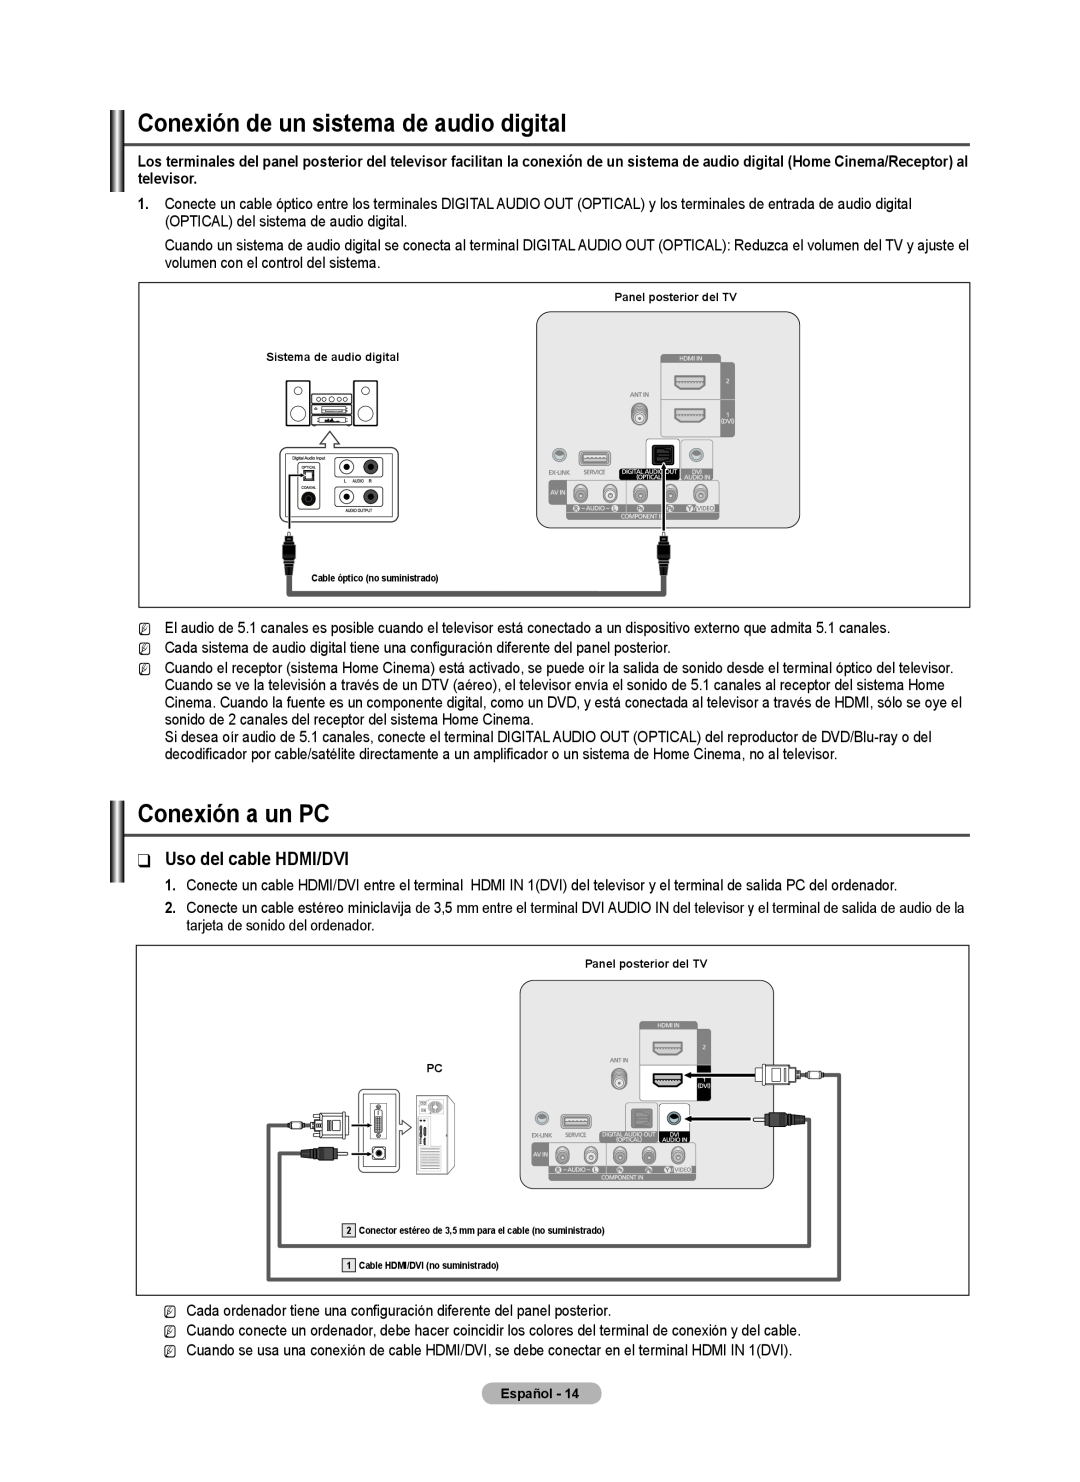 Samsung BN68-02426A-00 user manual Conexión de un sistema de audio digital, Conexión a un PC, Uso del cable HDMI/DVI 